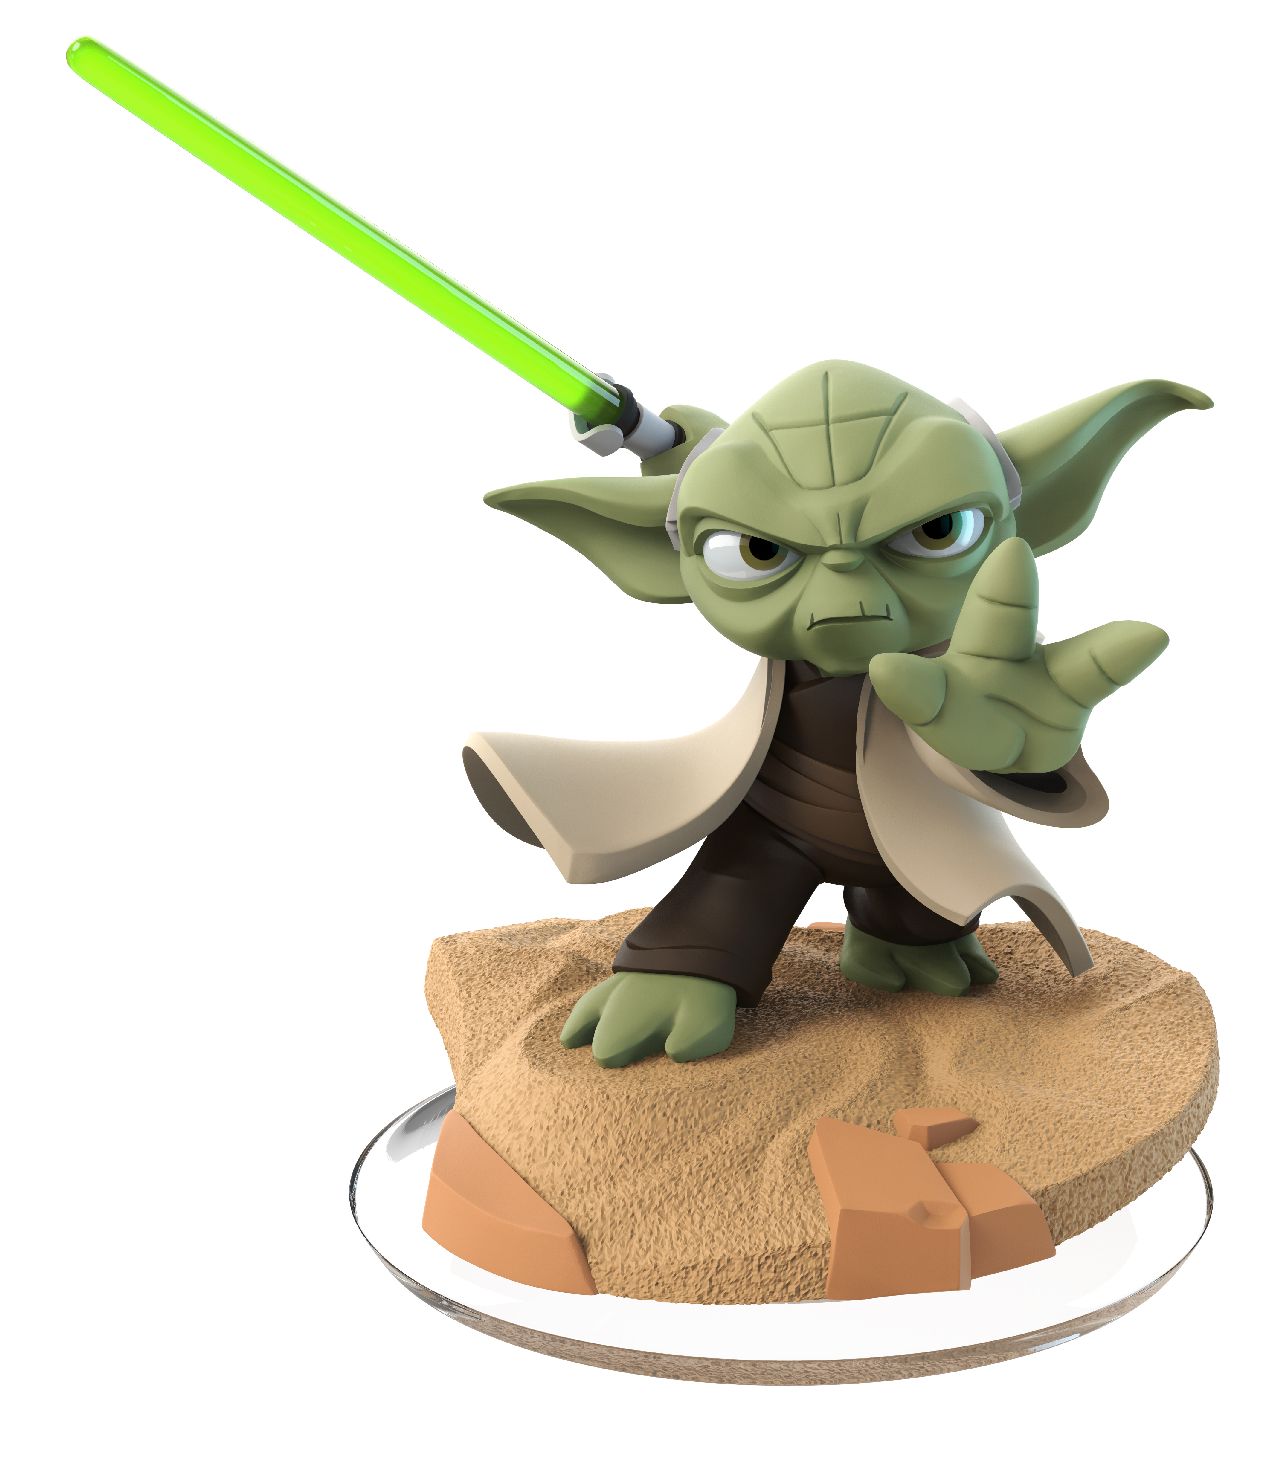 Disney Infinity 3.0 Yoda